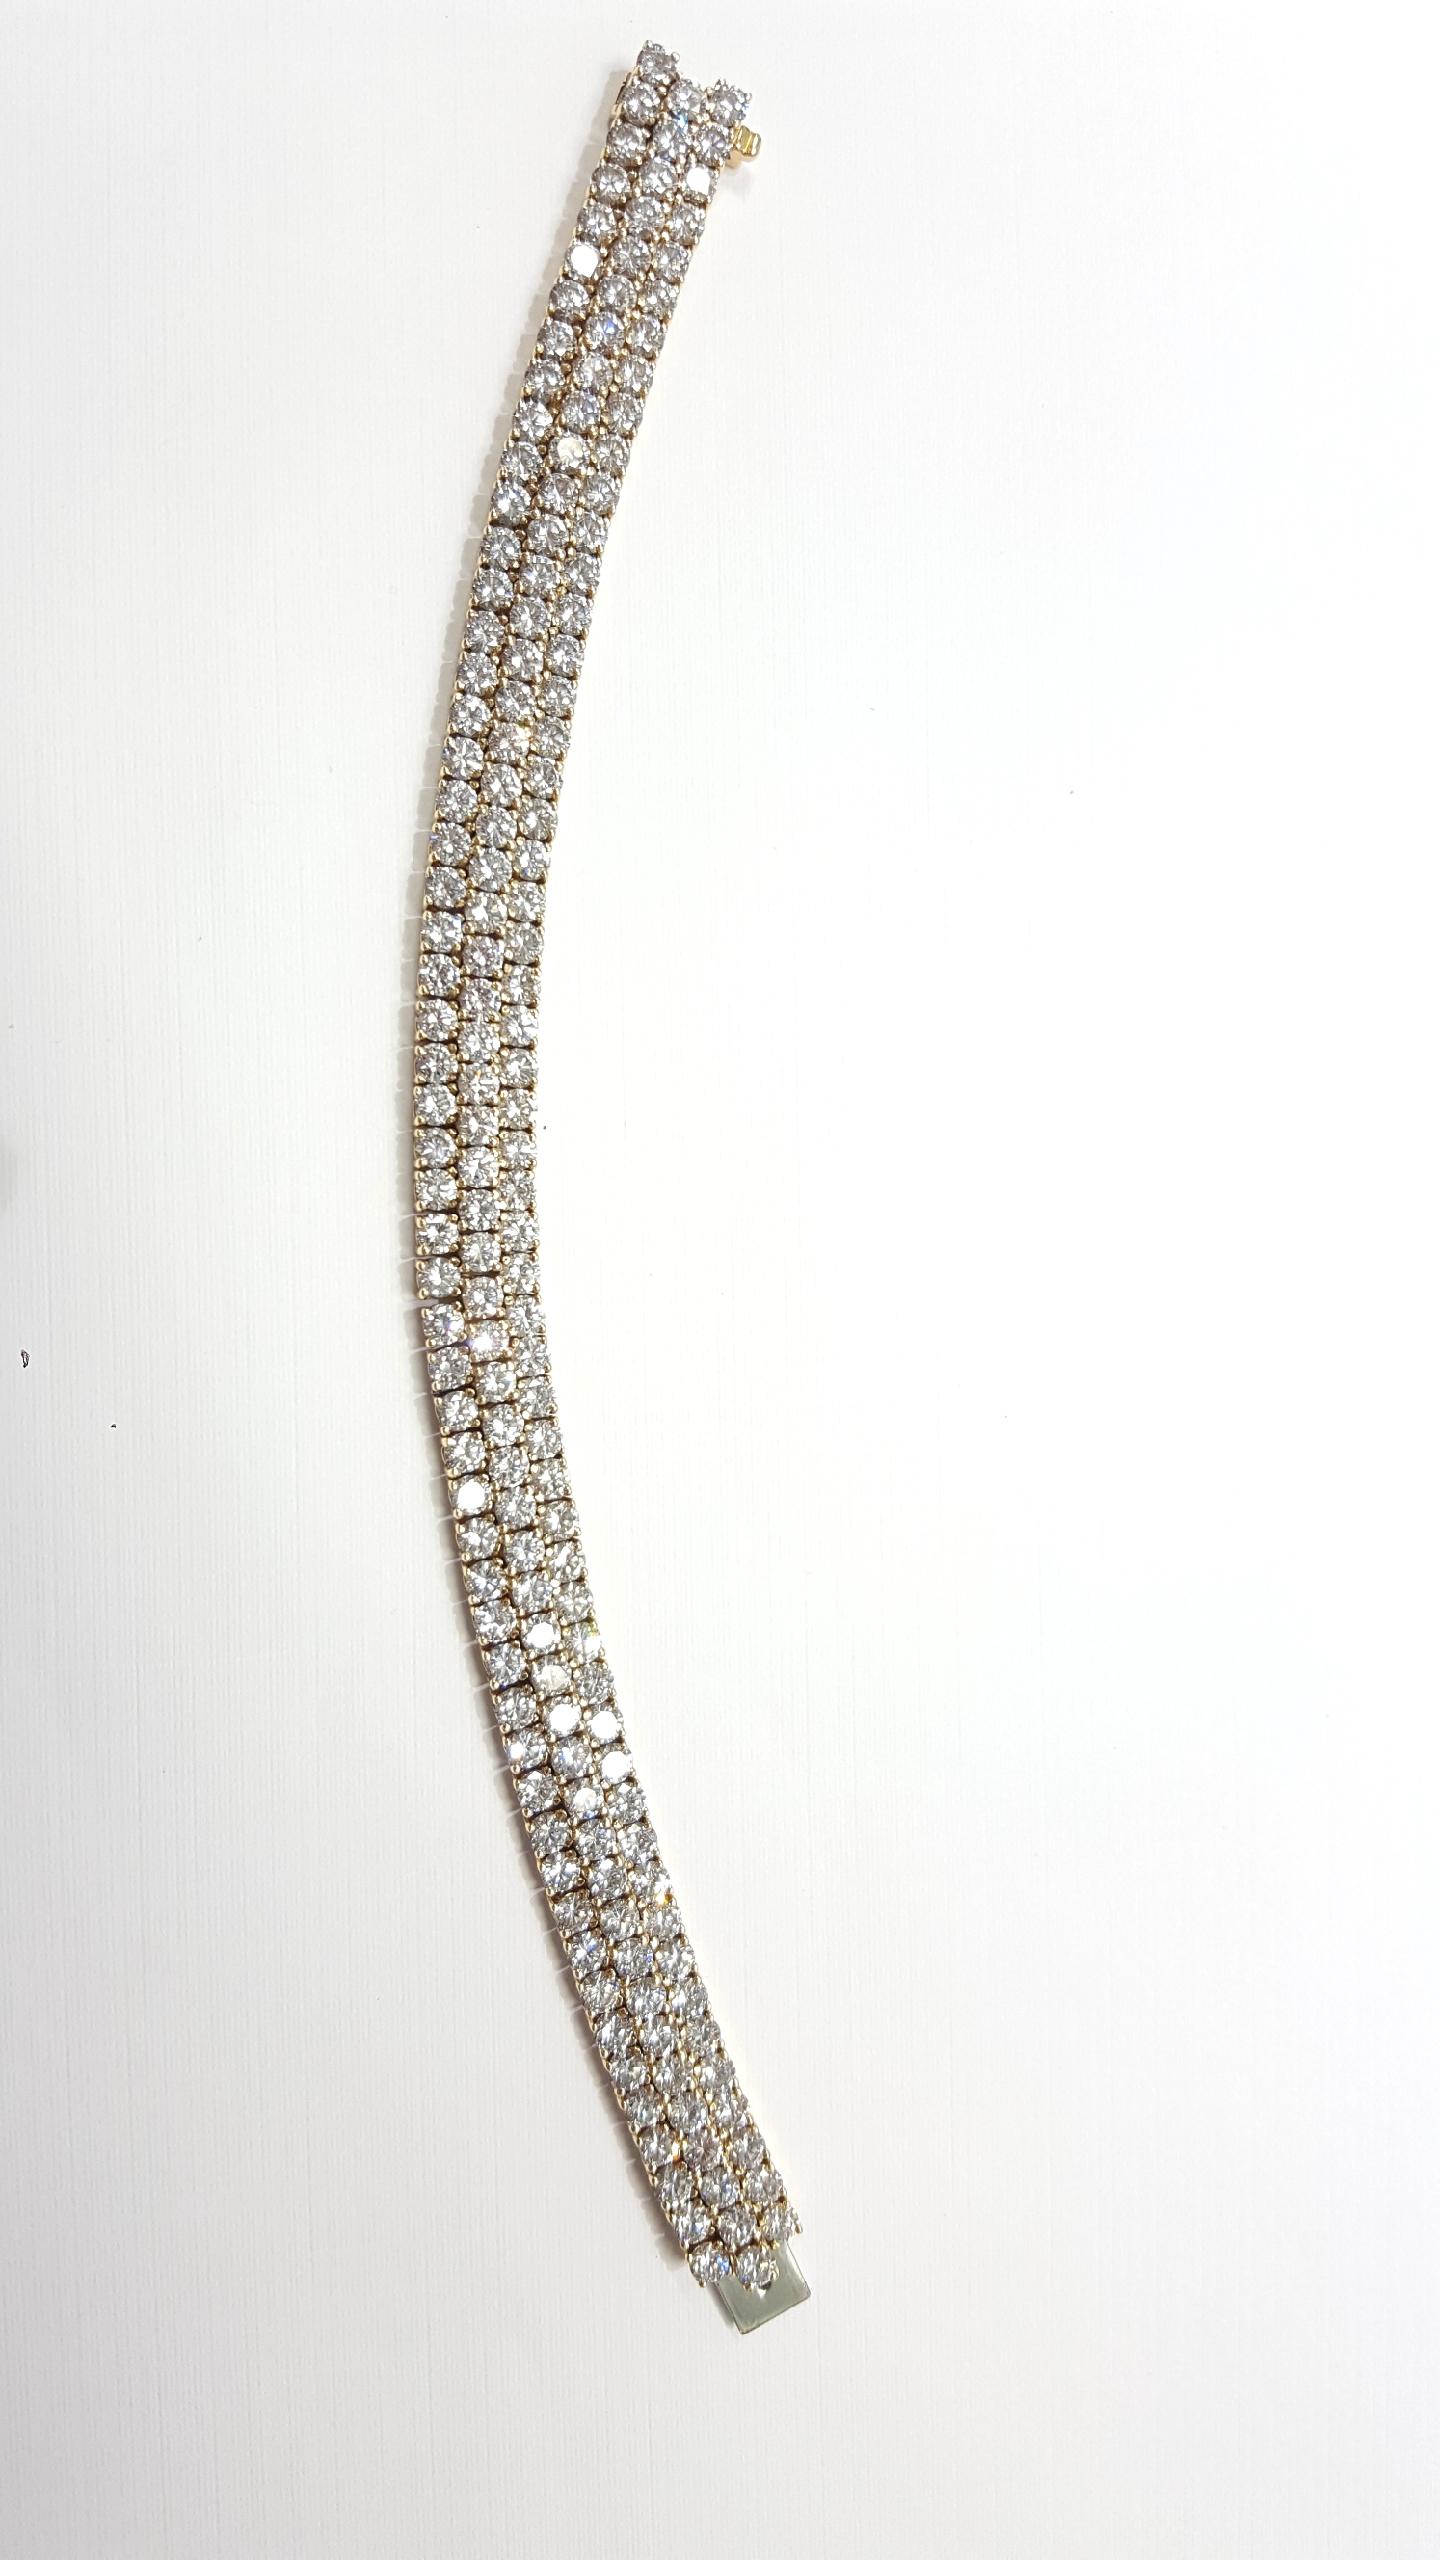 20 carat diamond bracelet